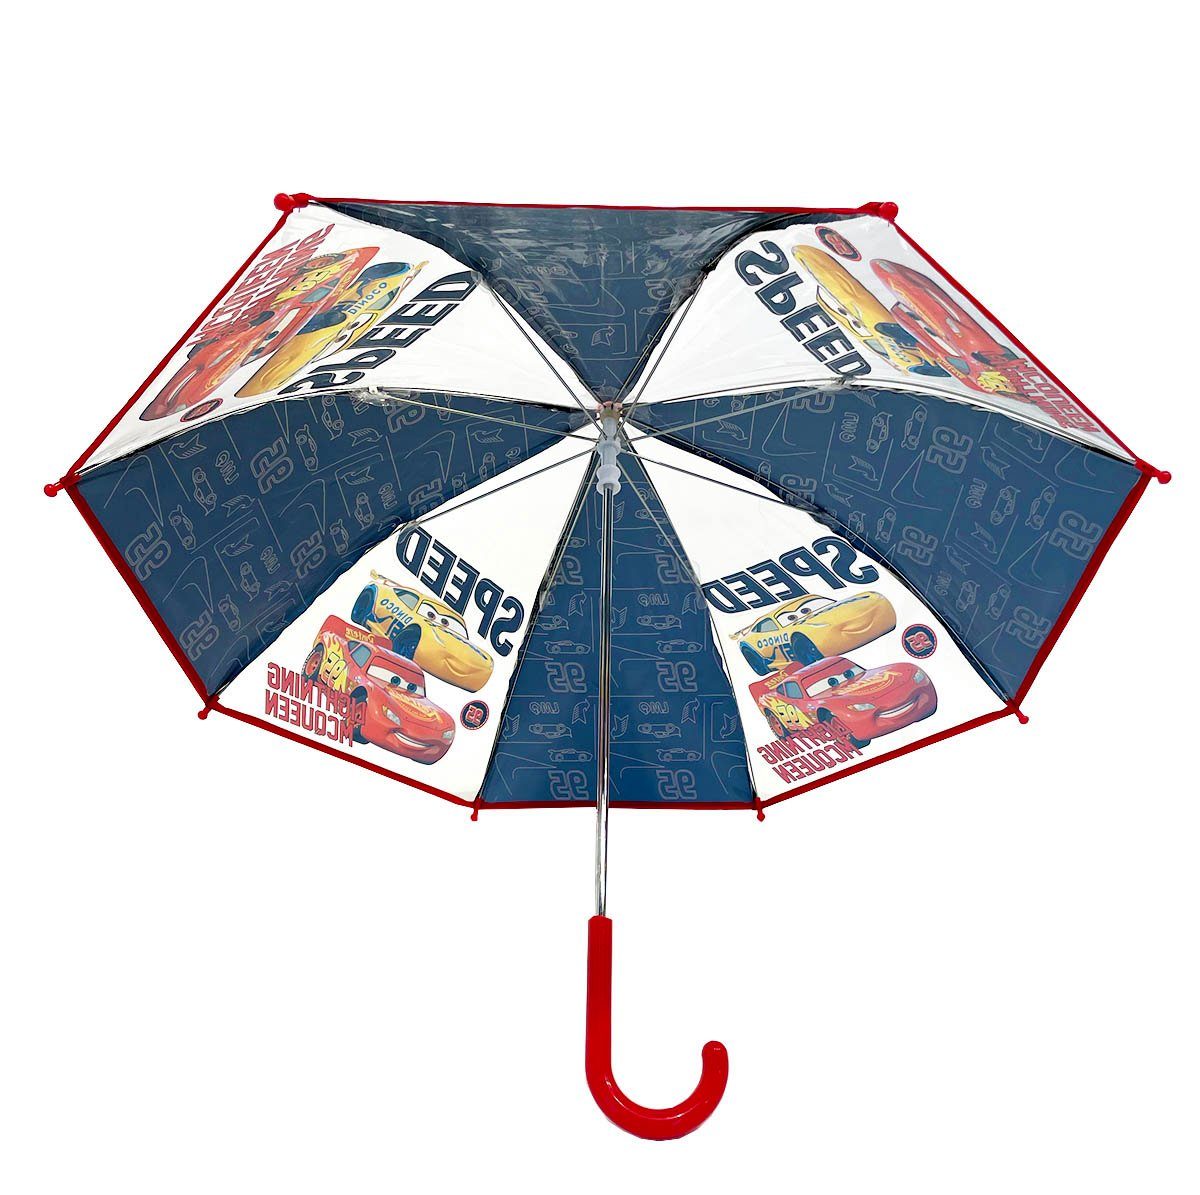 Vadobag Stockregenschirm Kinderschirm Regenschirm Cars Kindermotiv Days, Rainy